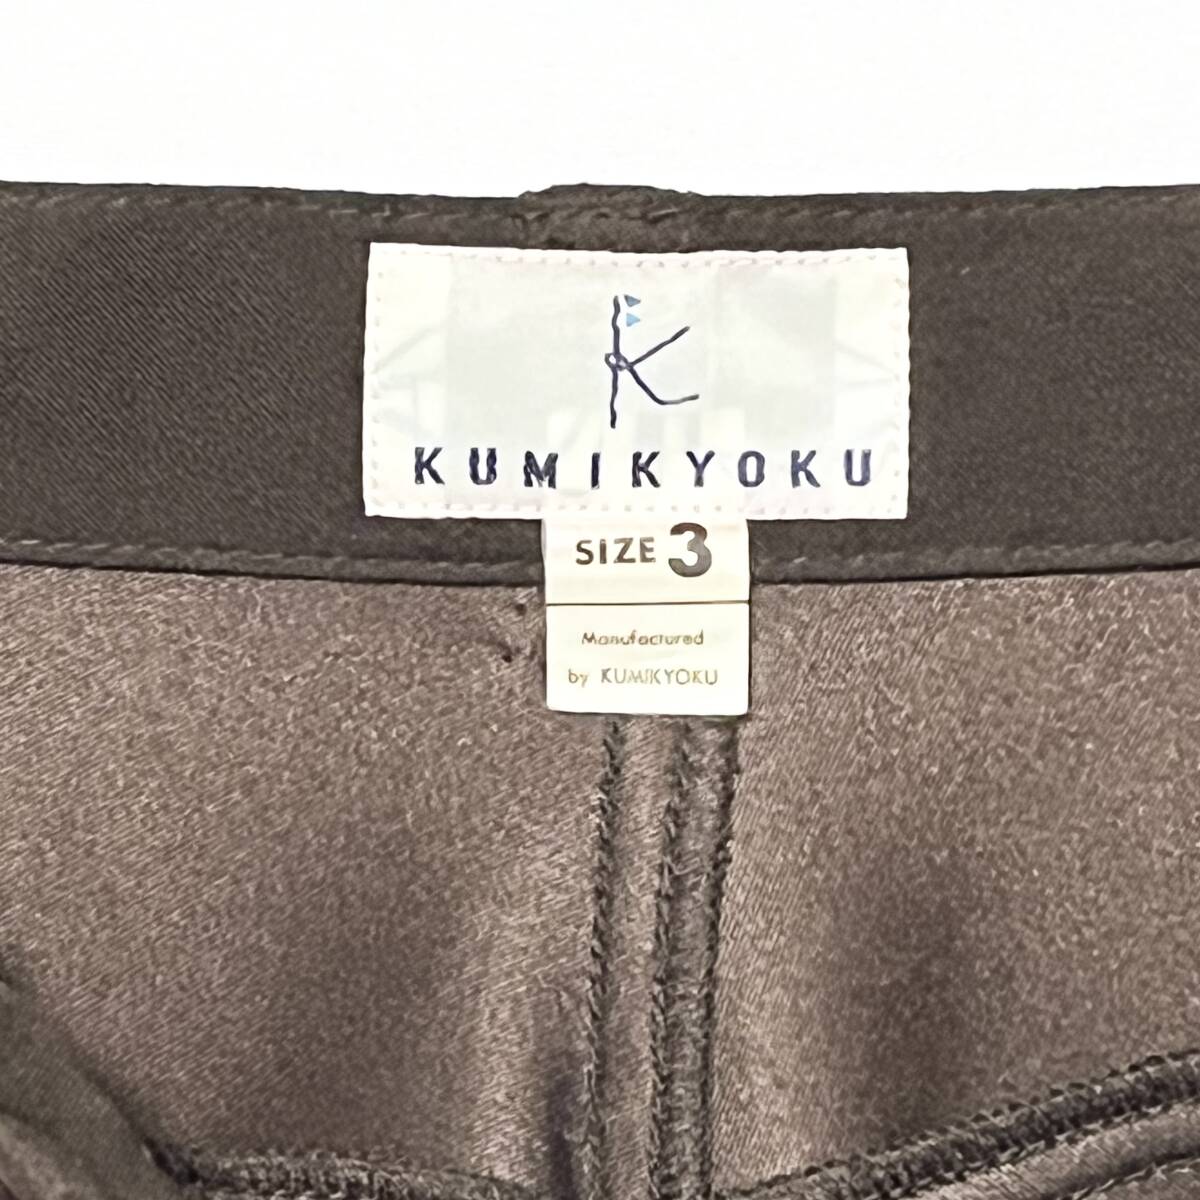 KUMIKYOKU (組曲) レディース ズボン 茶色 ブラウン パンツ ボトムス ファッション 女性 S M L X XL サイズ_画像7